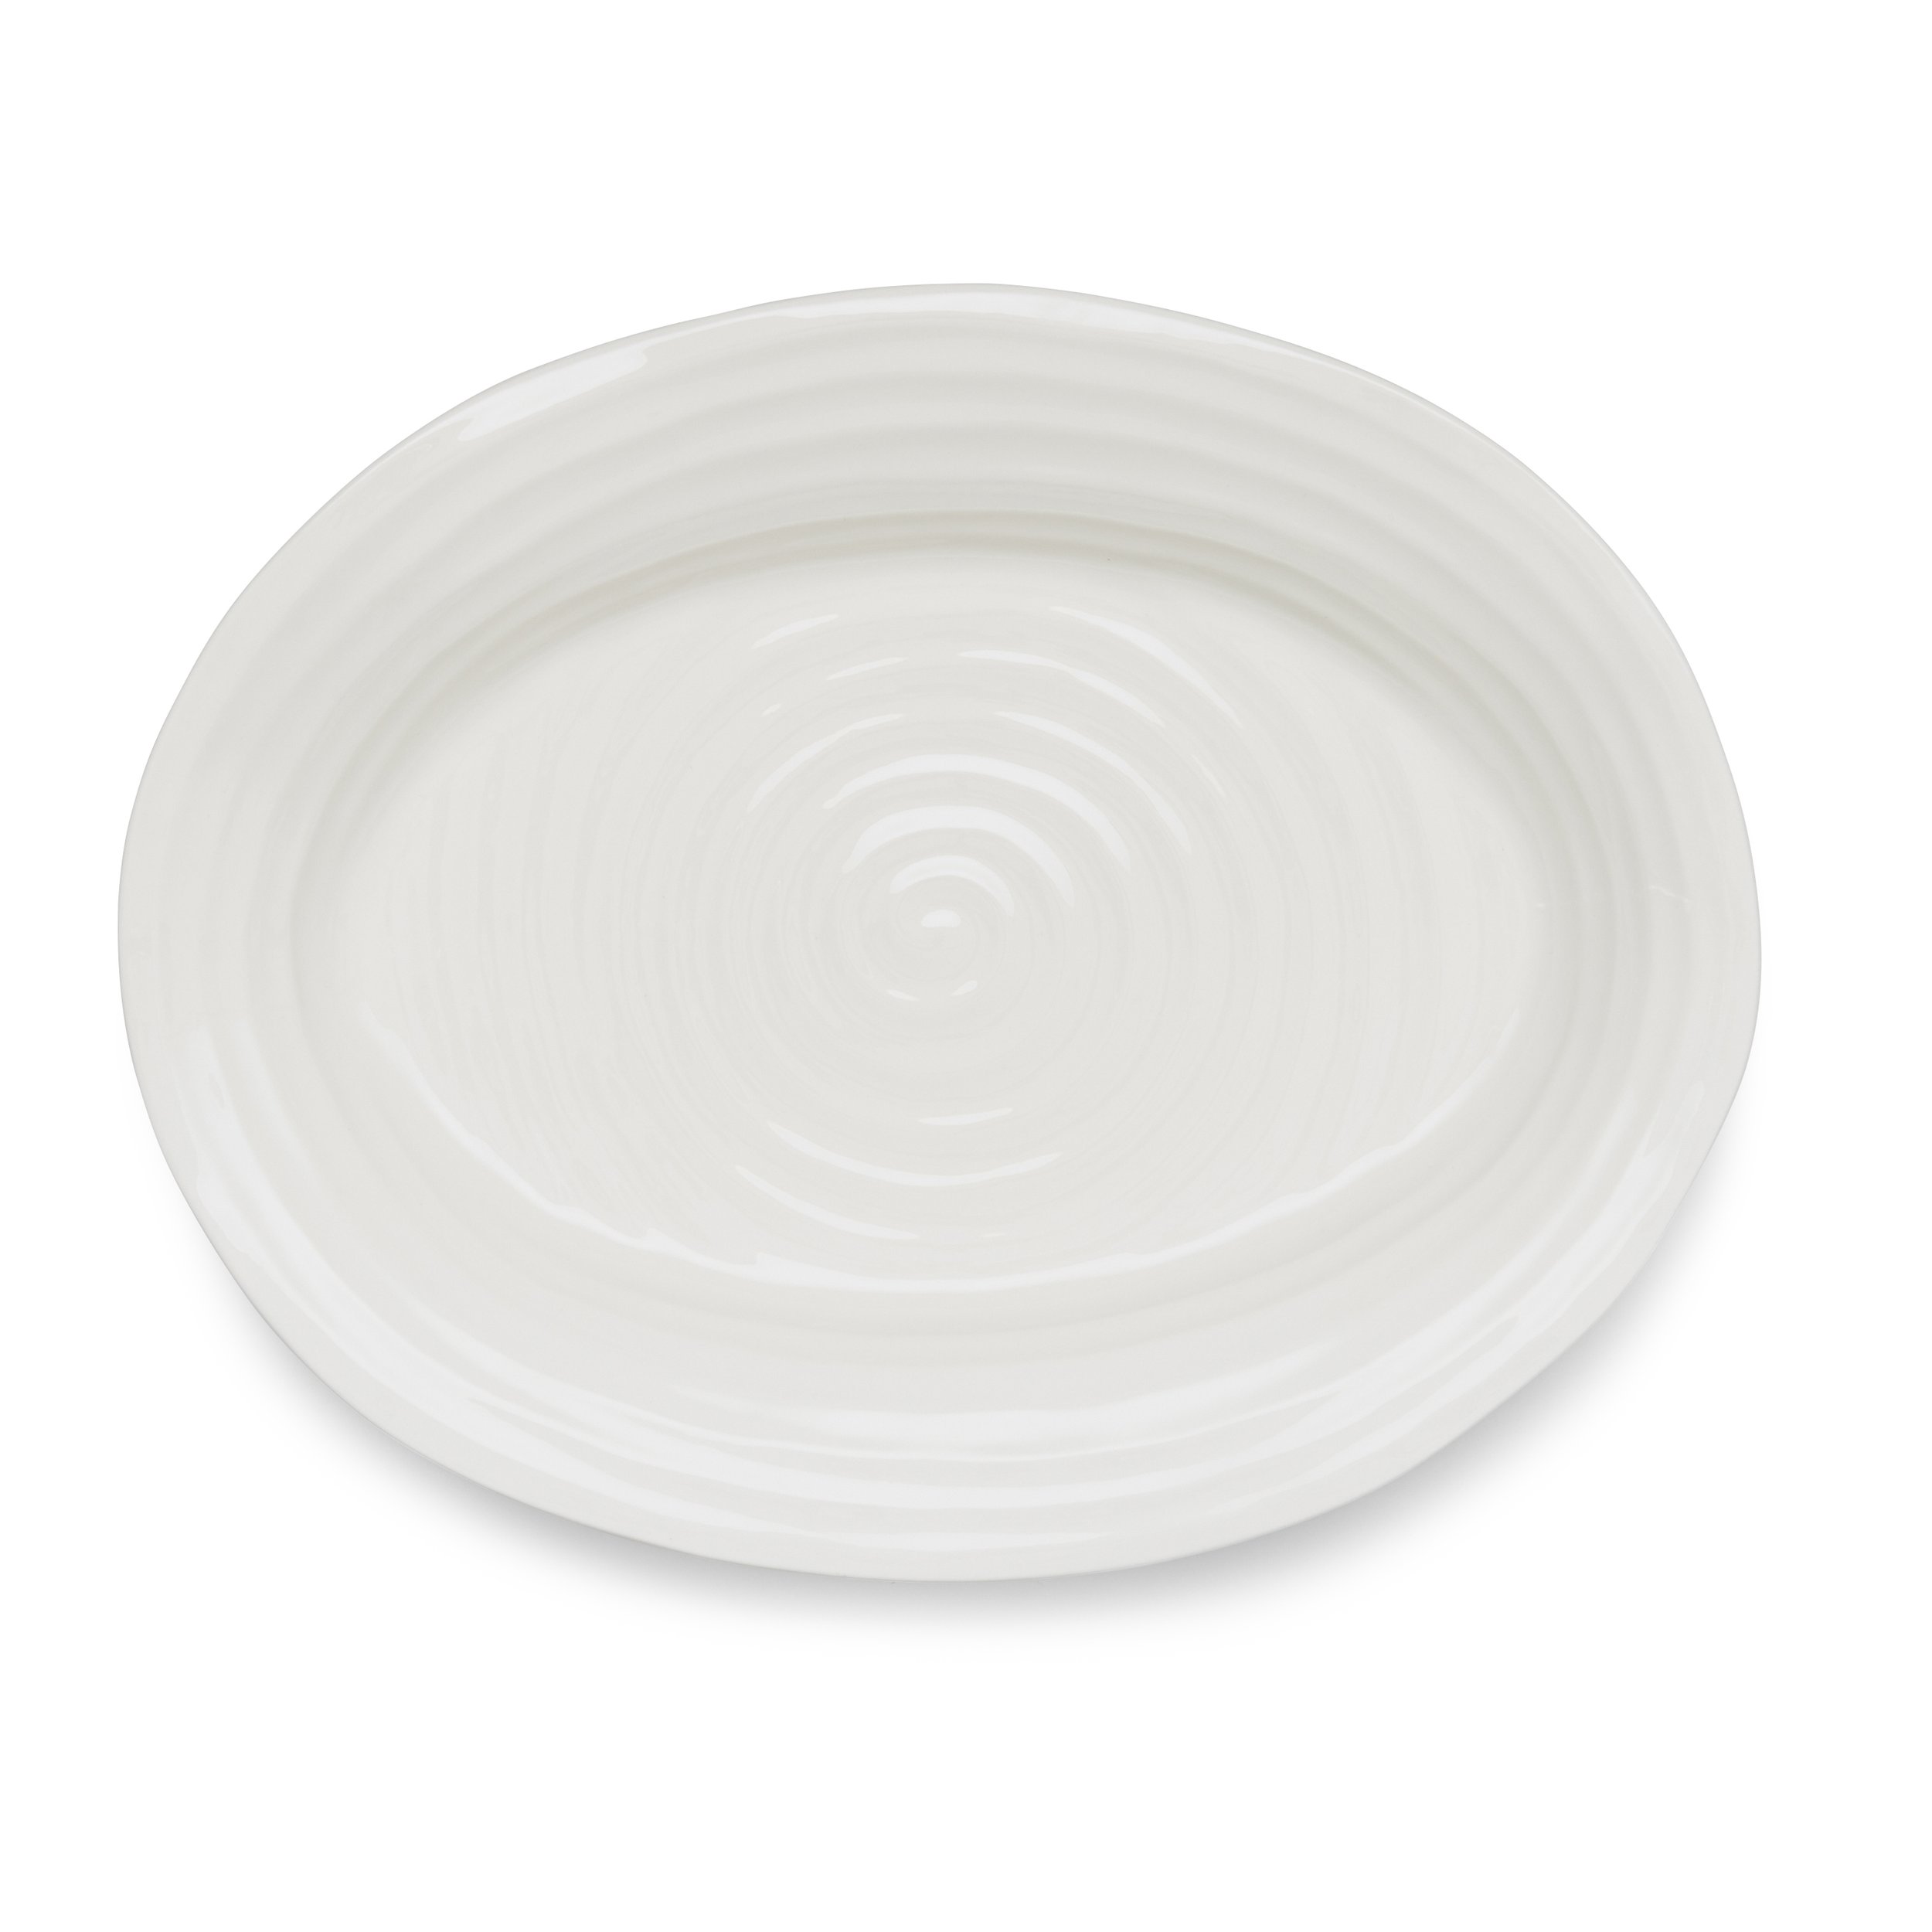 9212- Medium Oval Platter-White- $36- Received